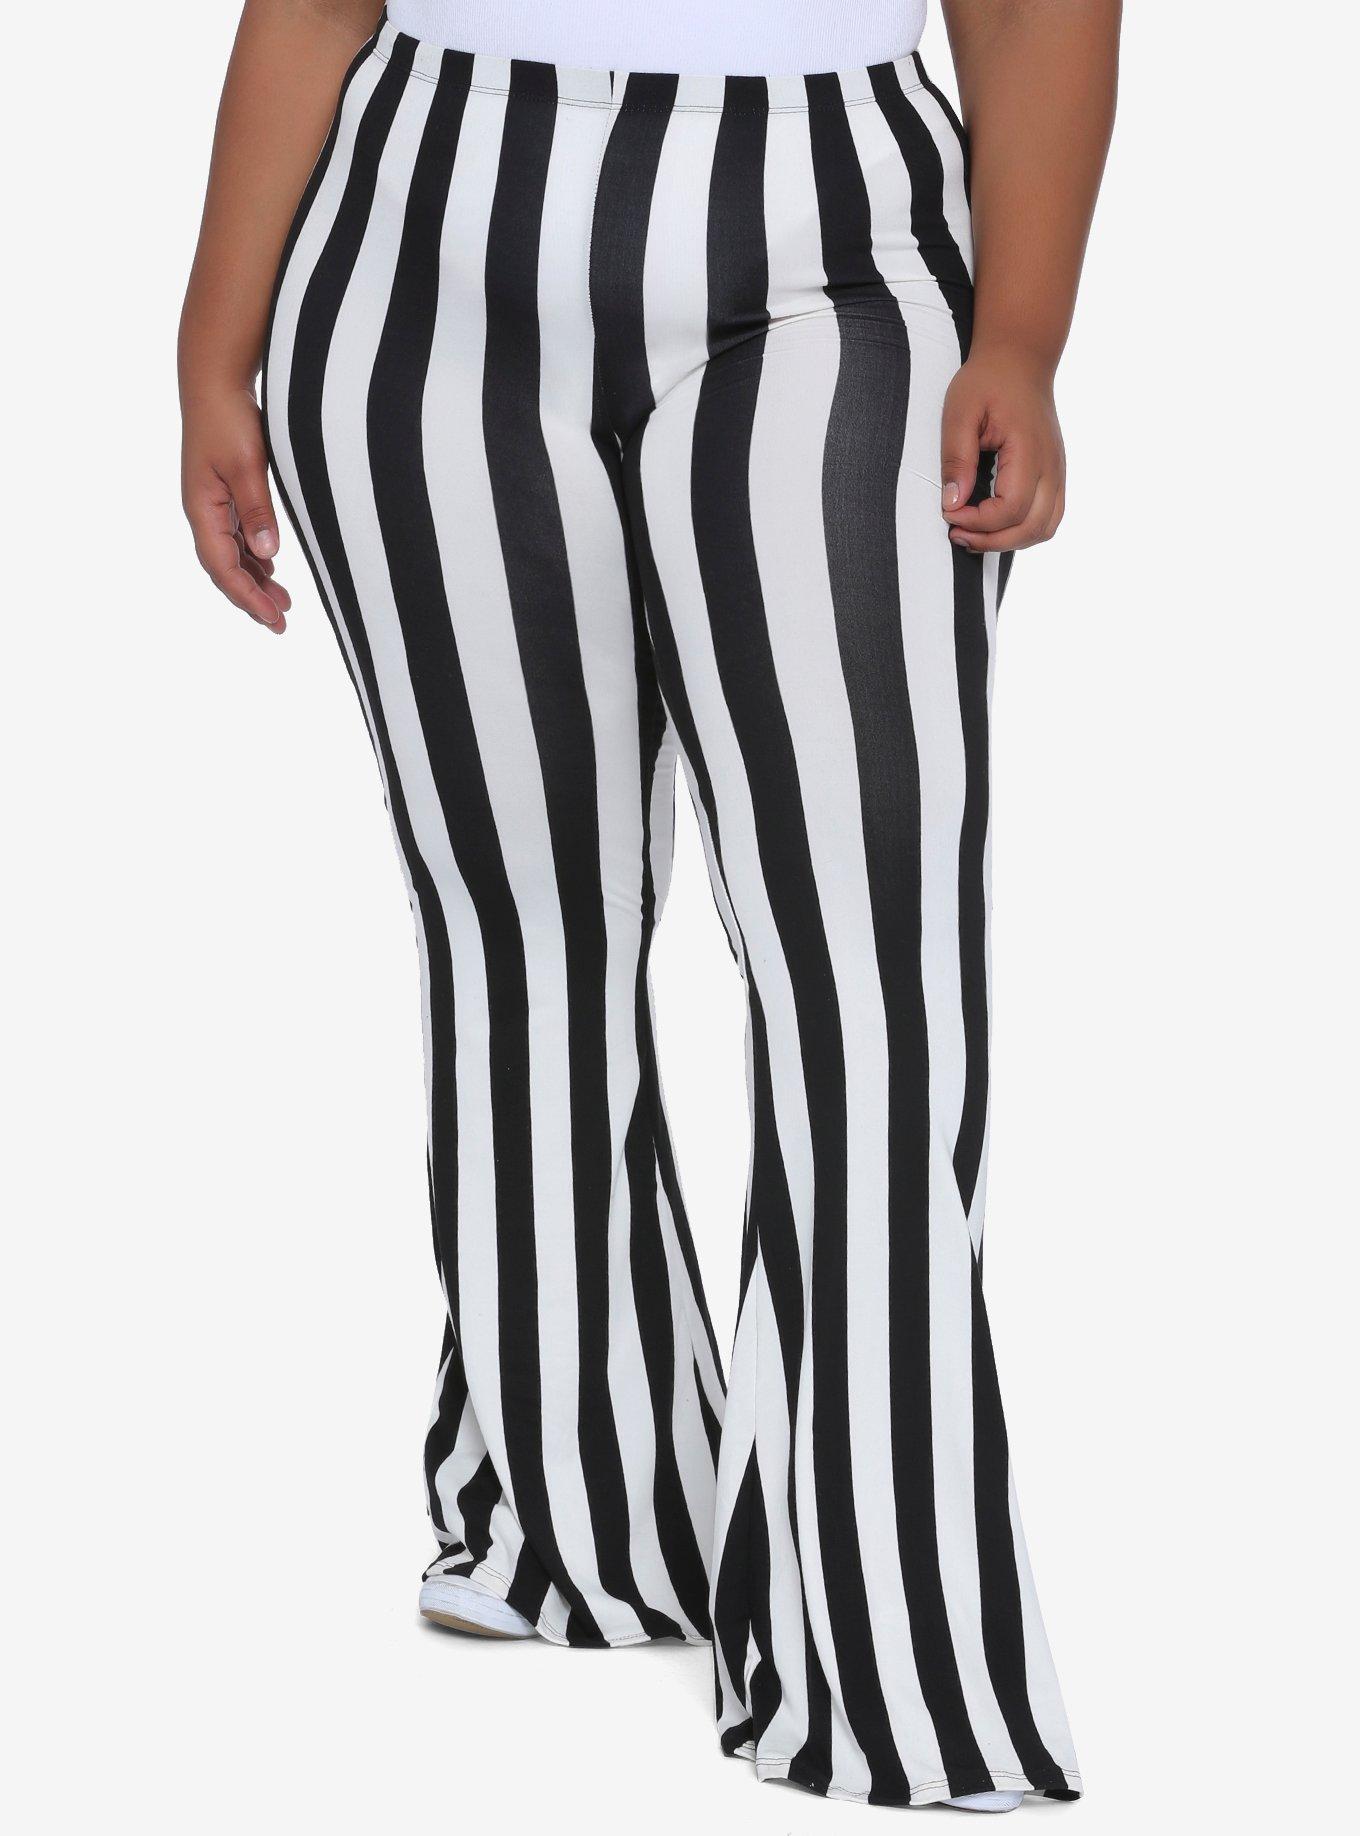 Black & White Stripe Flared Leggings Plus Size, BLACK WHITE STRIPE, hi-res